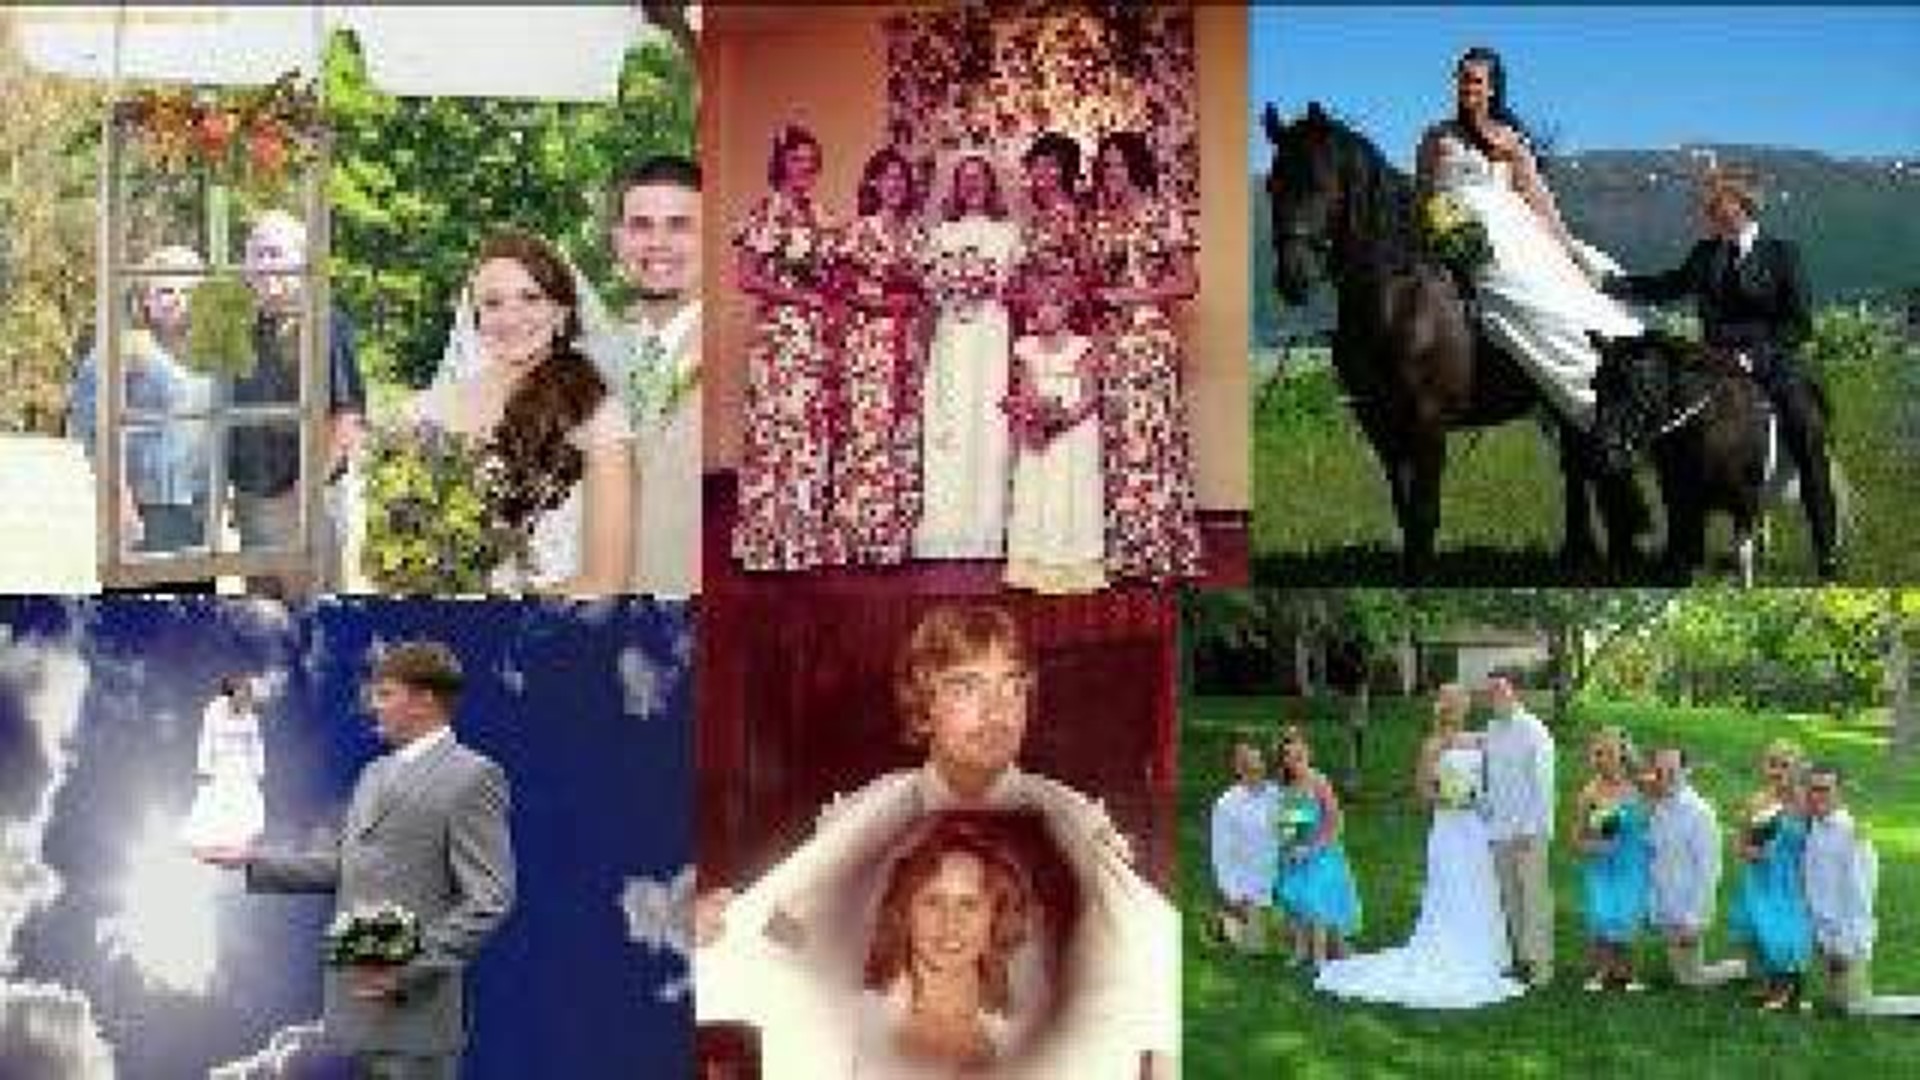 Leckey Time: Wedding Photo Fails